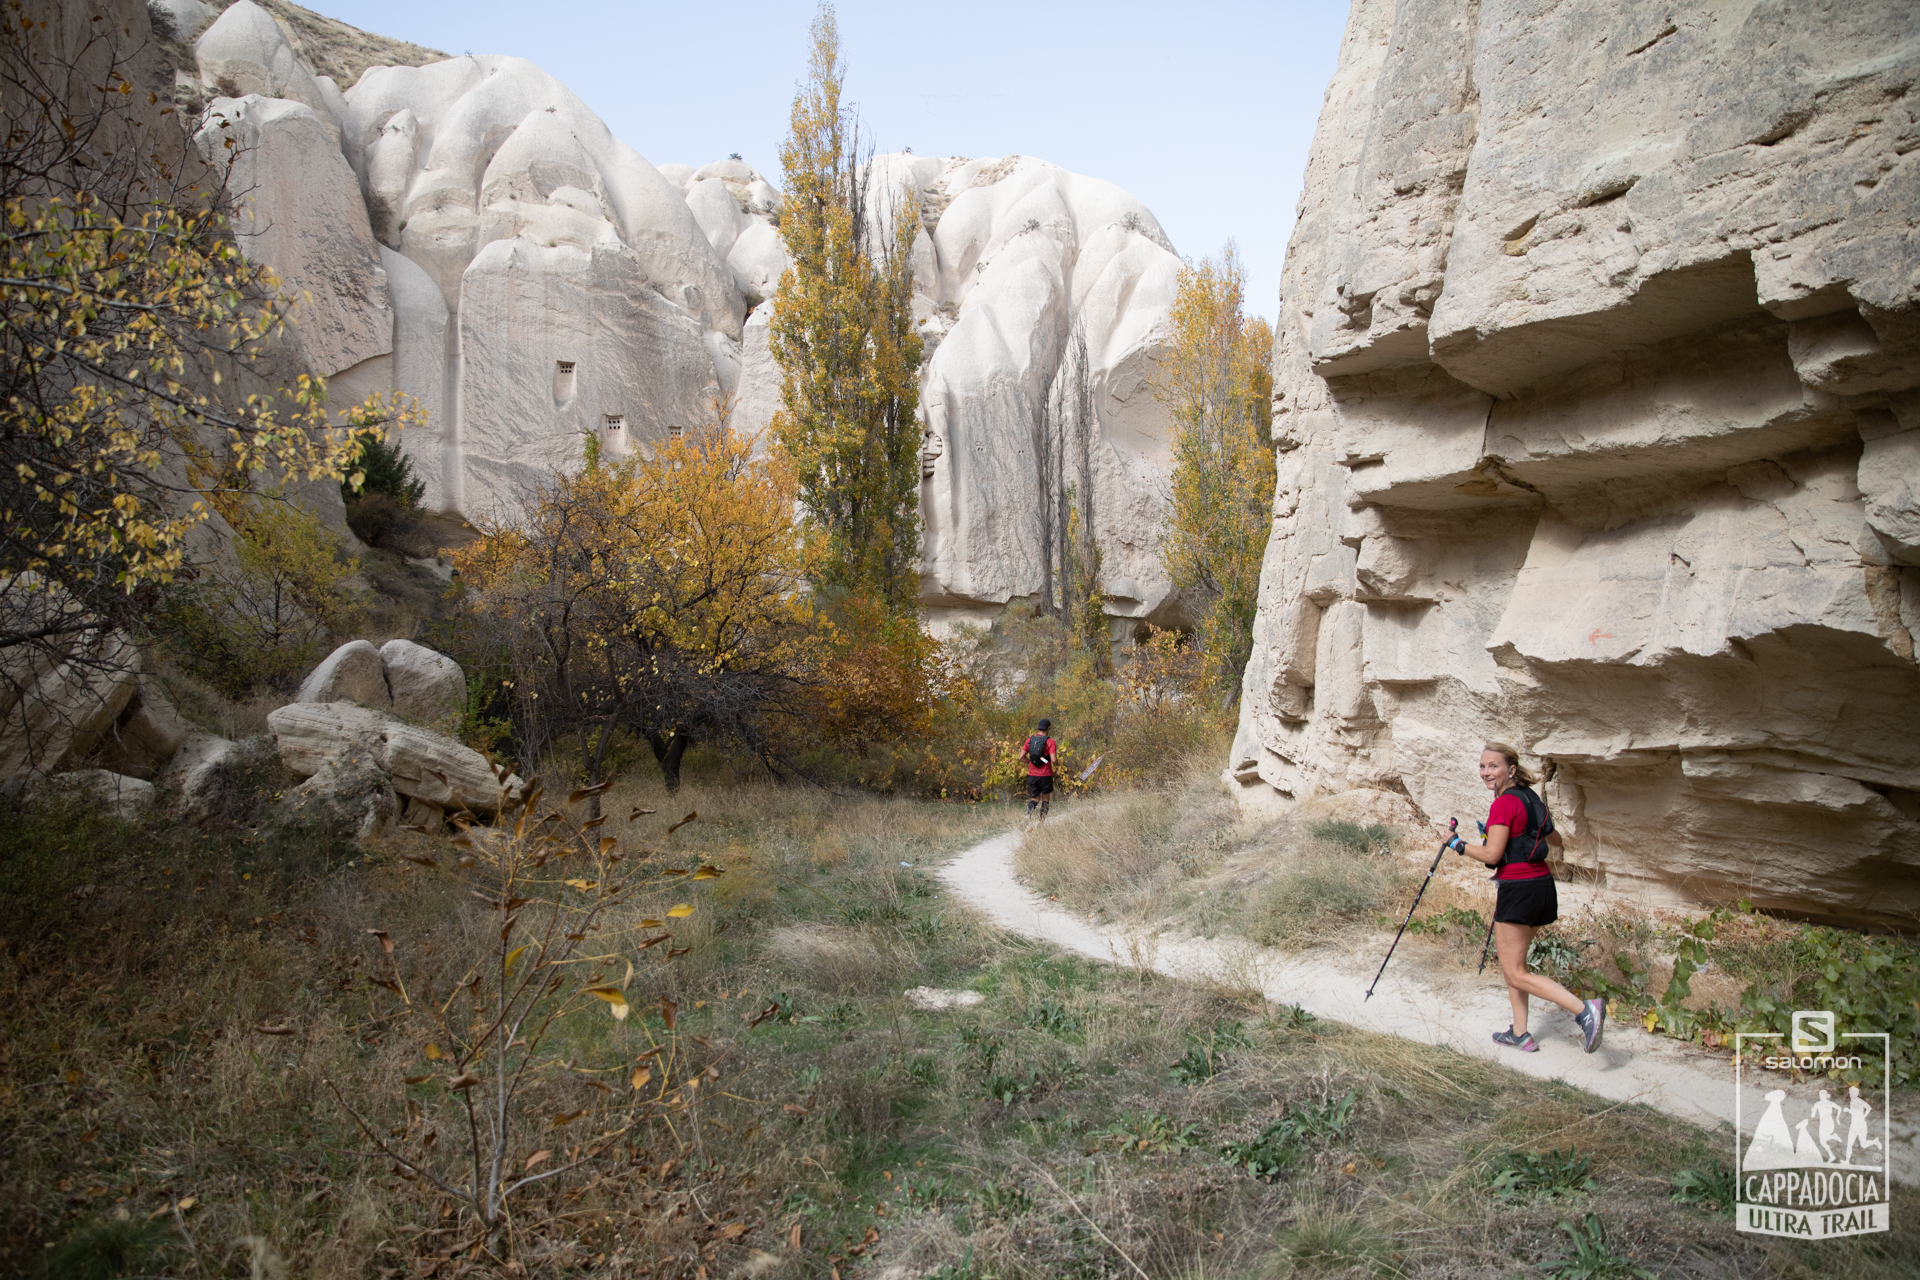 Salomon Cappadocia Ultra Trail